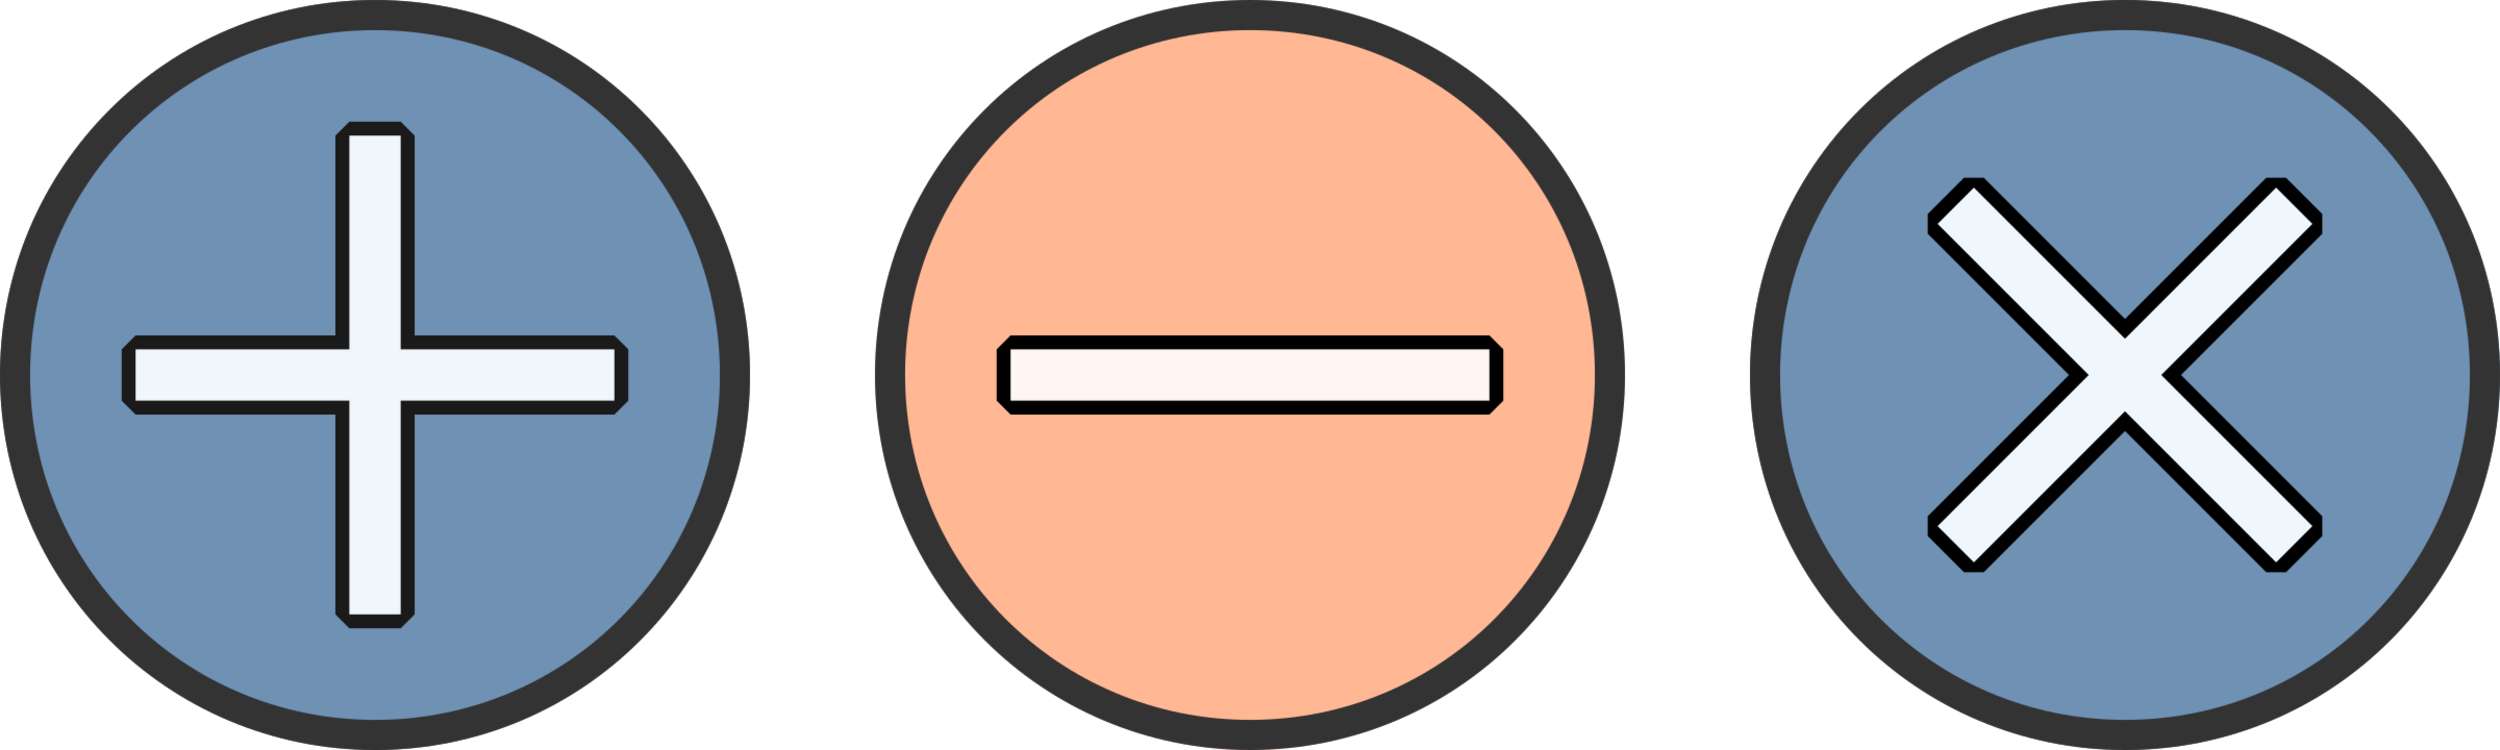 Symbol,Logo,Line